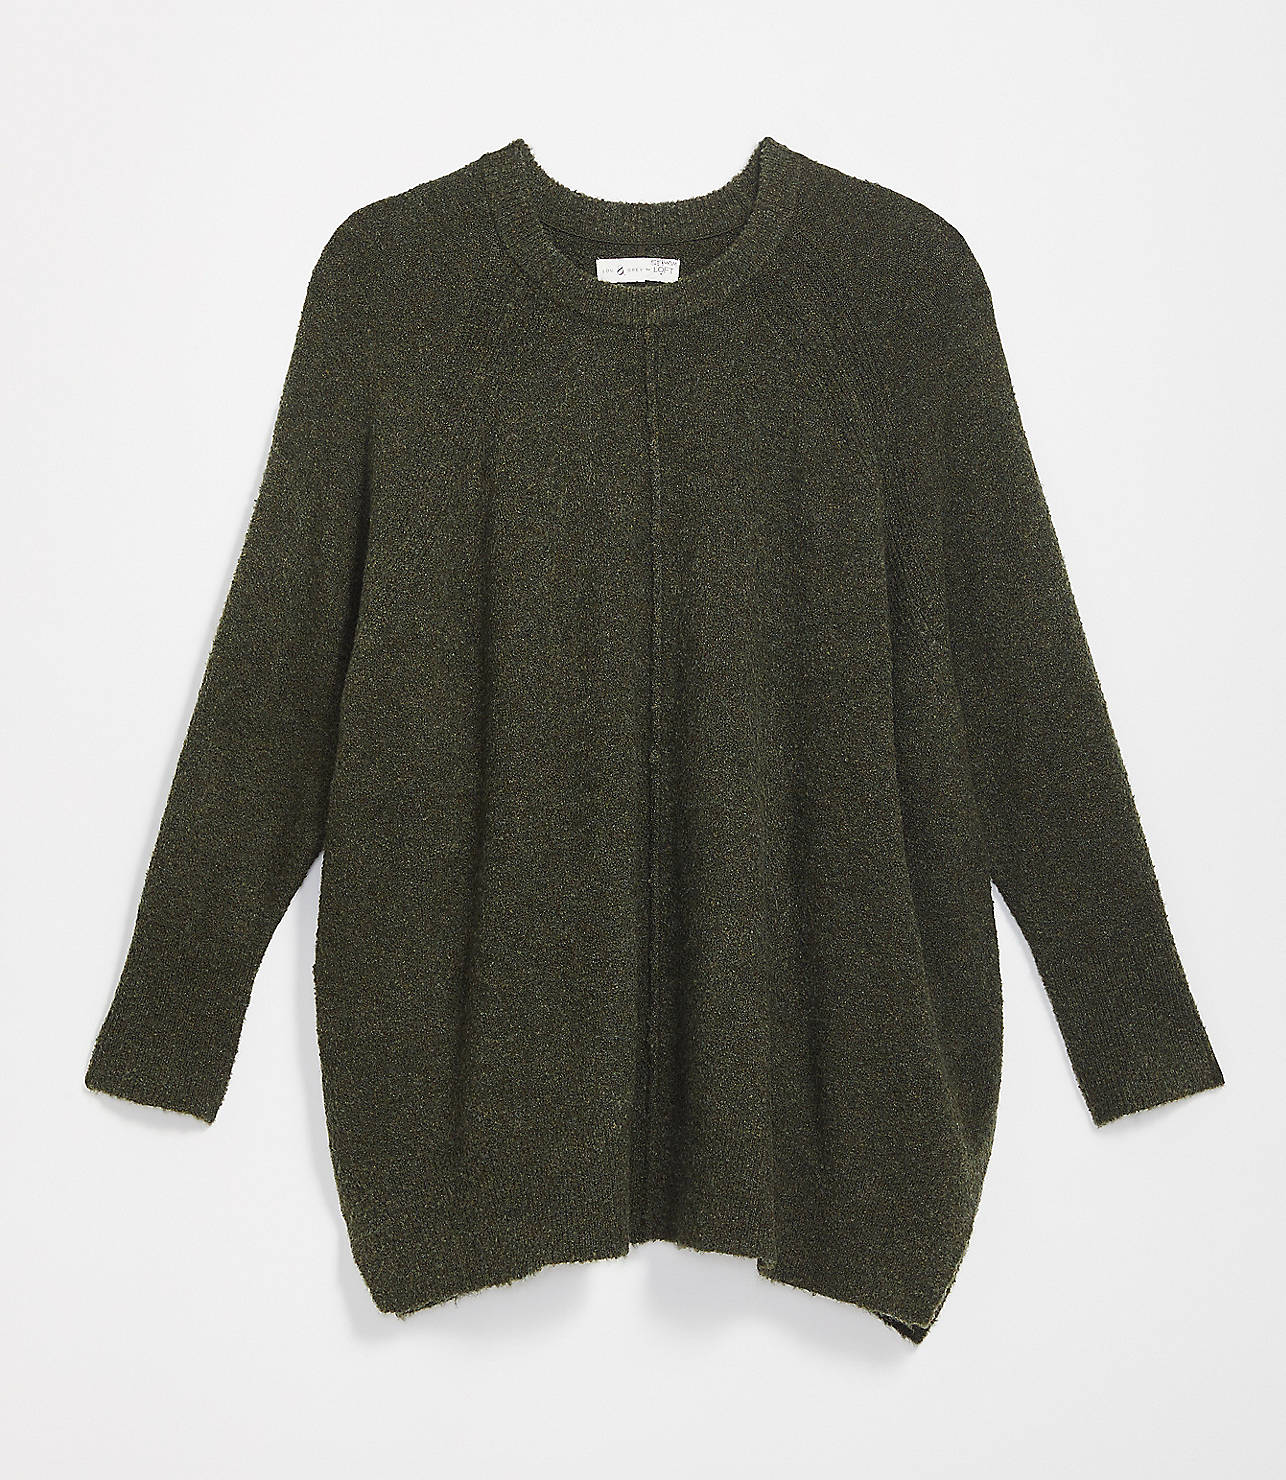 Lou & Grey Seamed Poncho Sweater